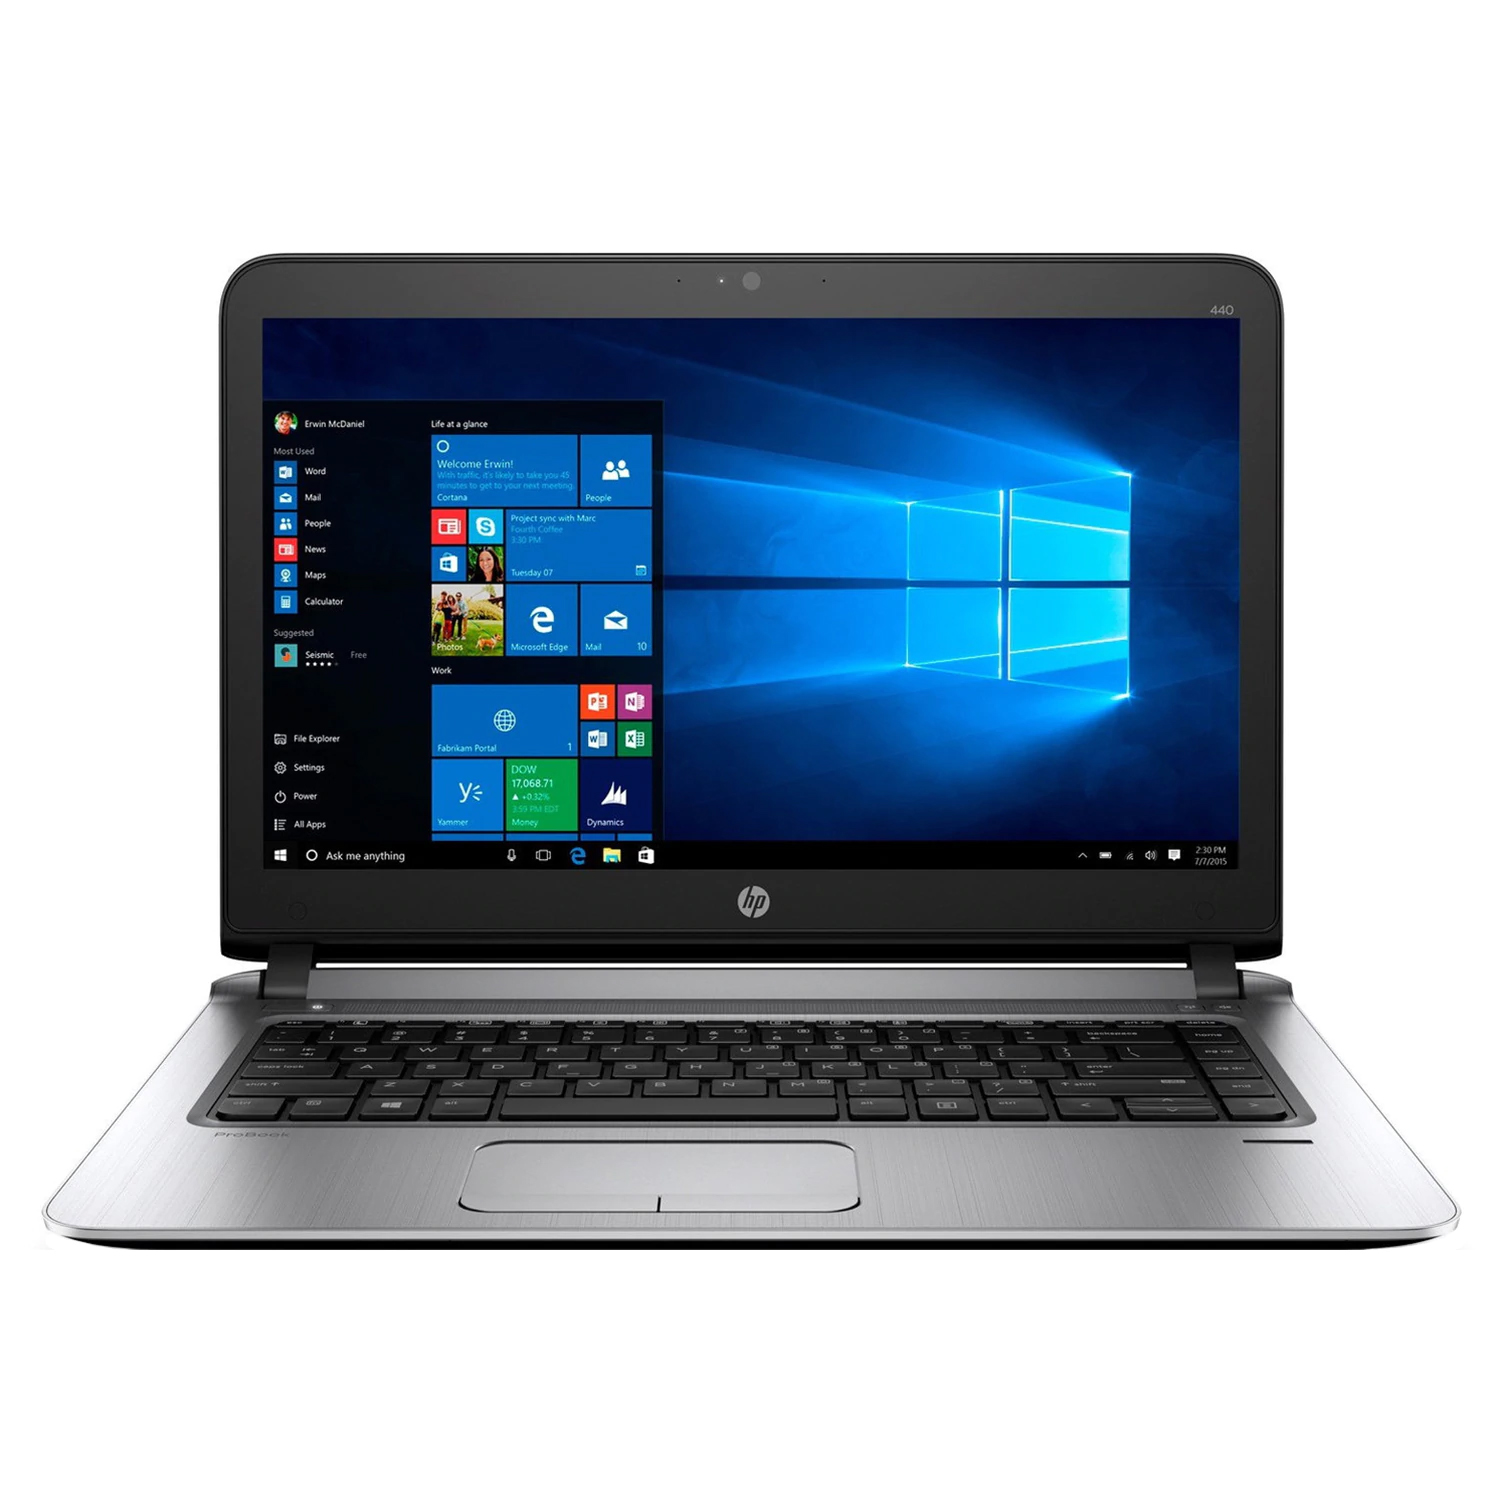 Laptop HP ProBook 440 G3, Intel Core i5-6200U 2.30GHz, 4GB DDR3, 120GB SSD, 14 Inch, Webcam